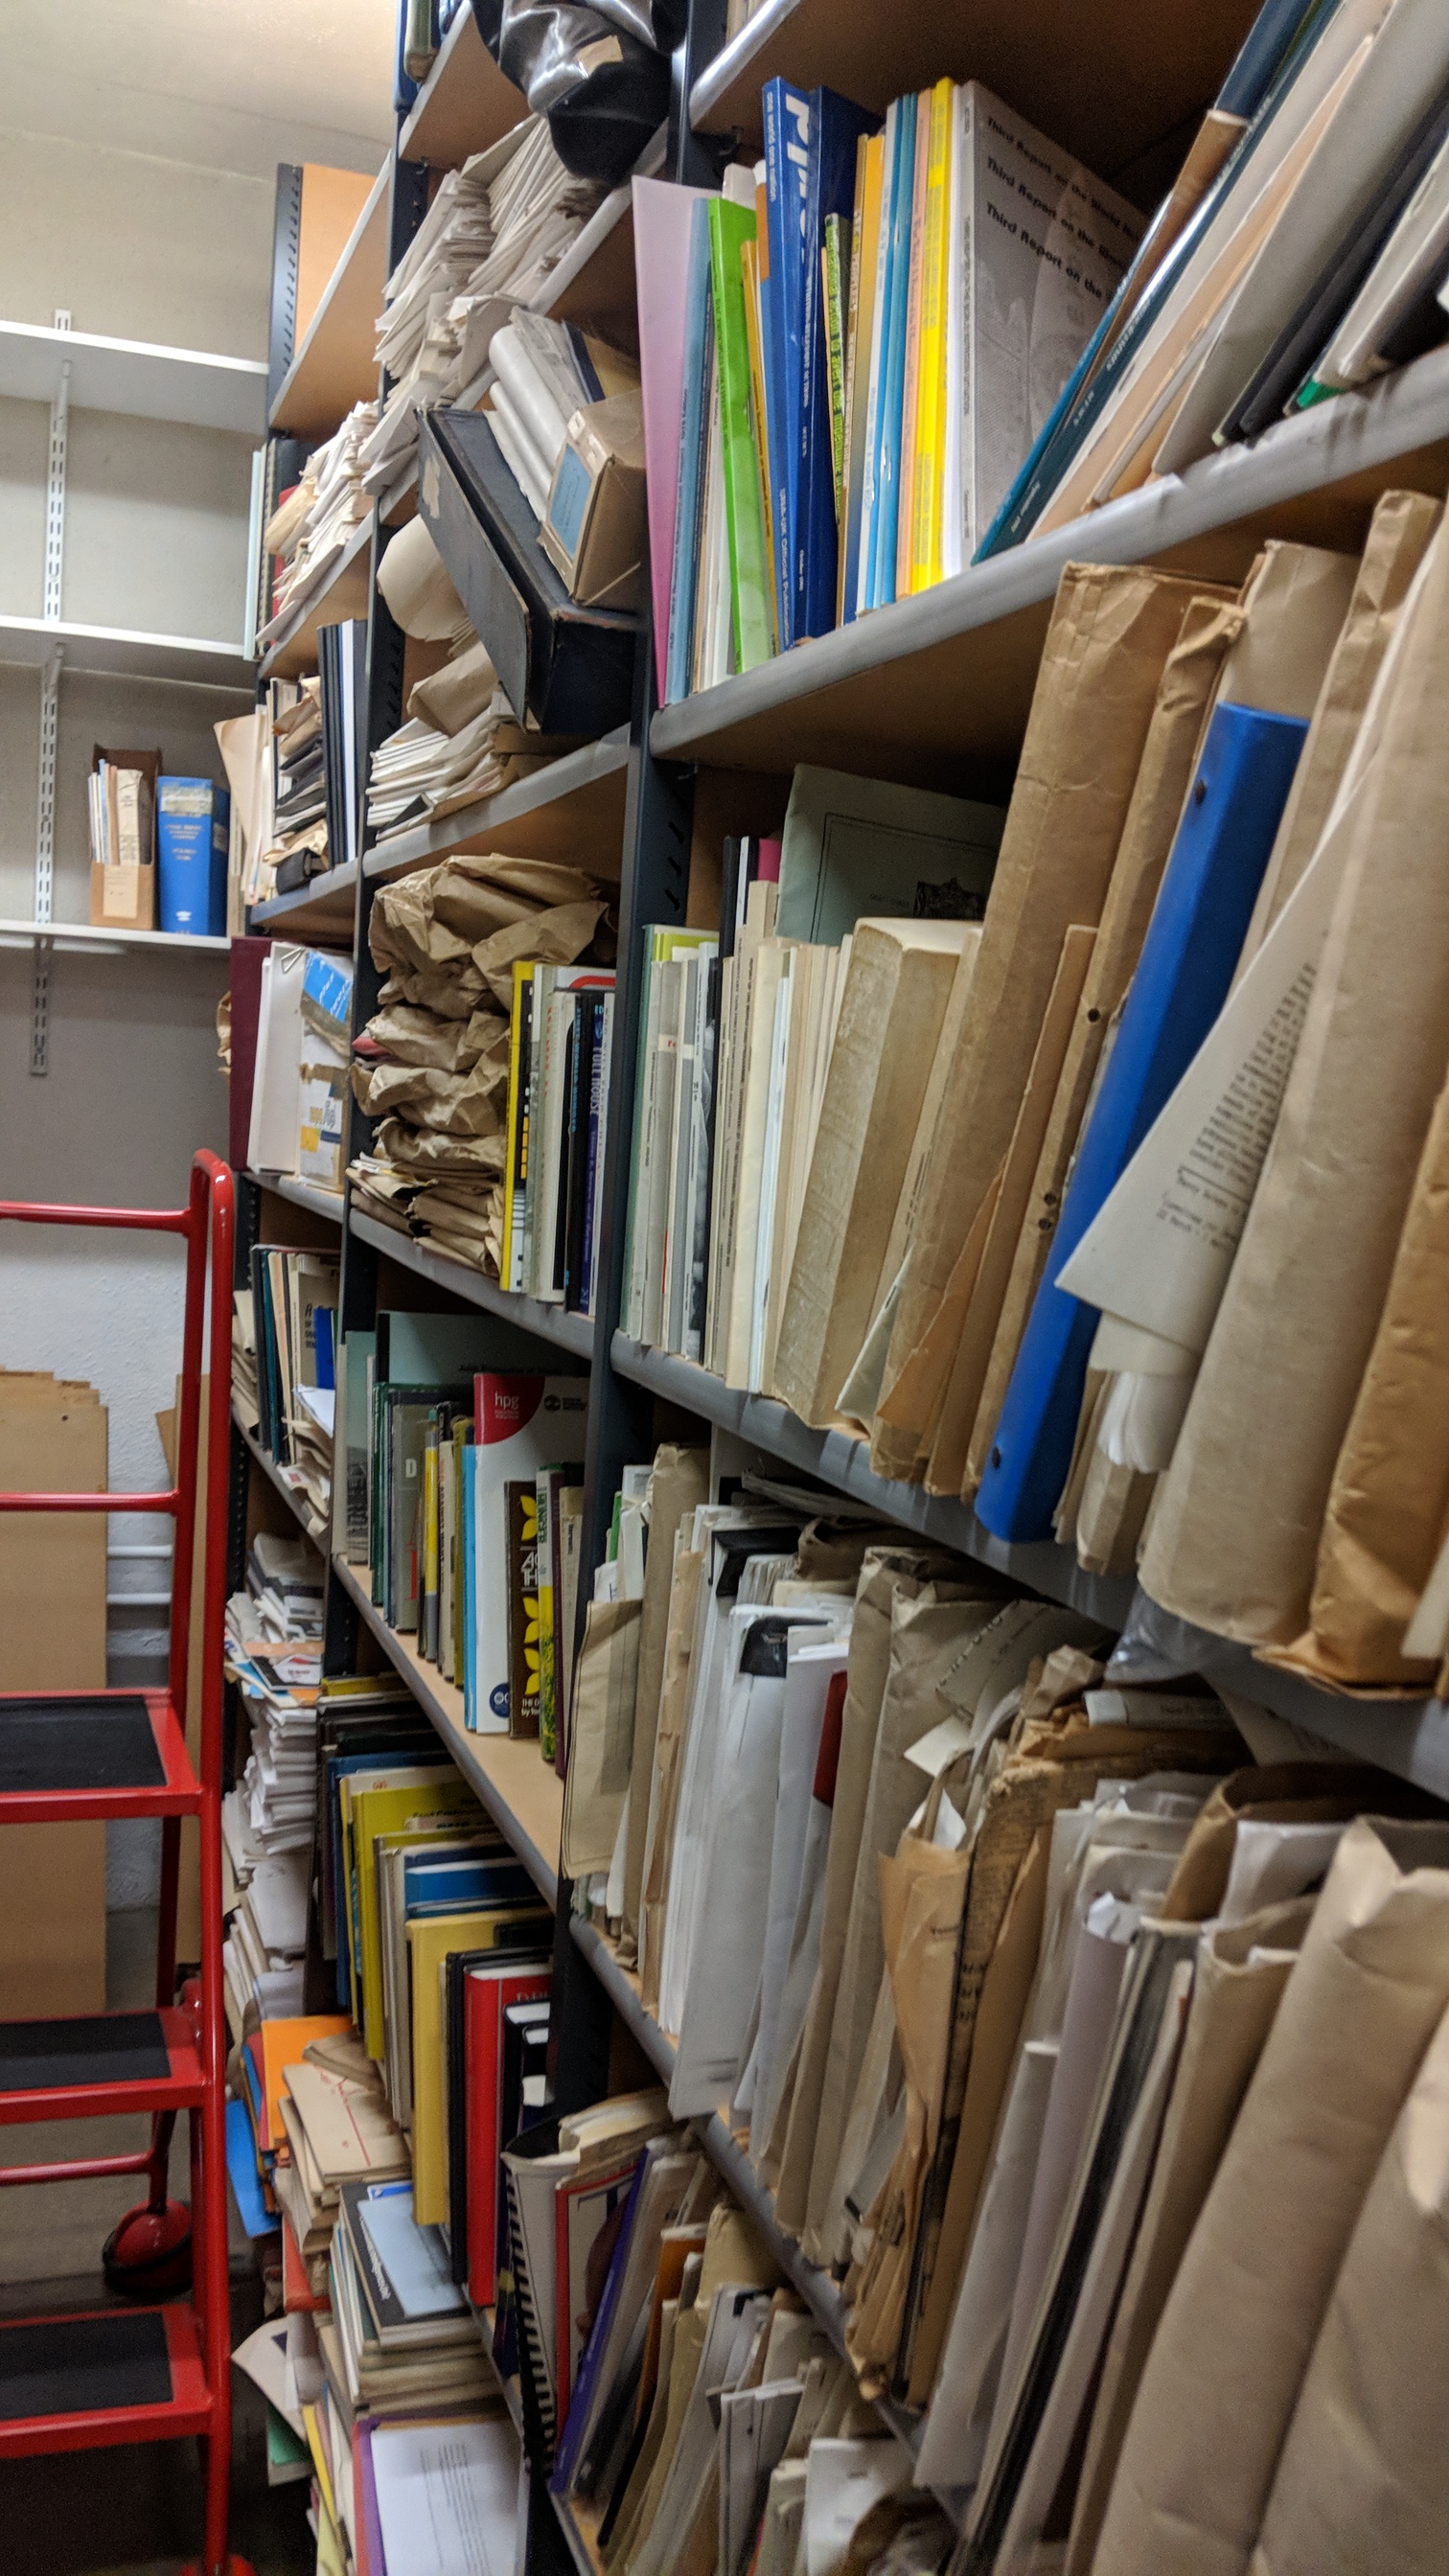 Shelves rammed full of pamphlets, documents, envelopes